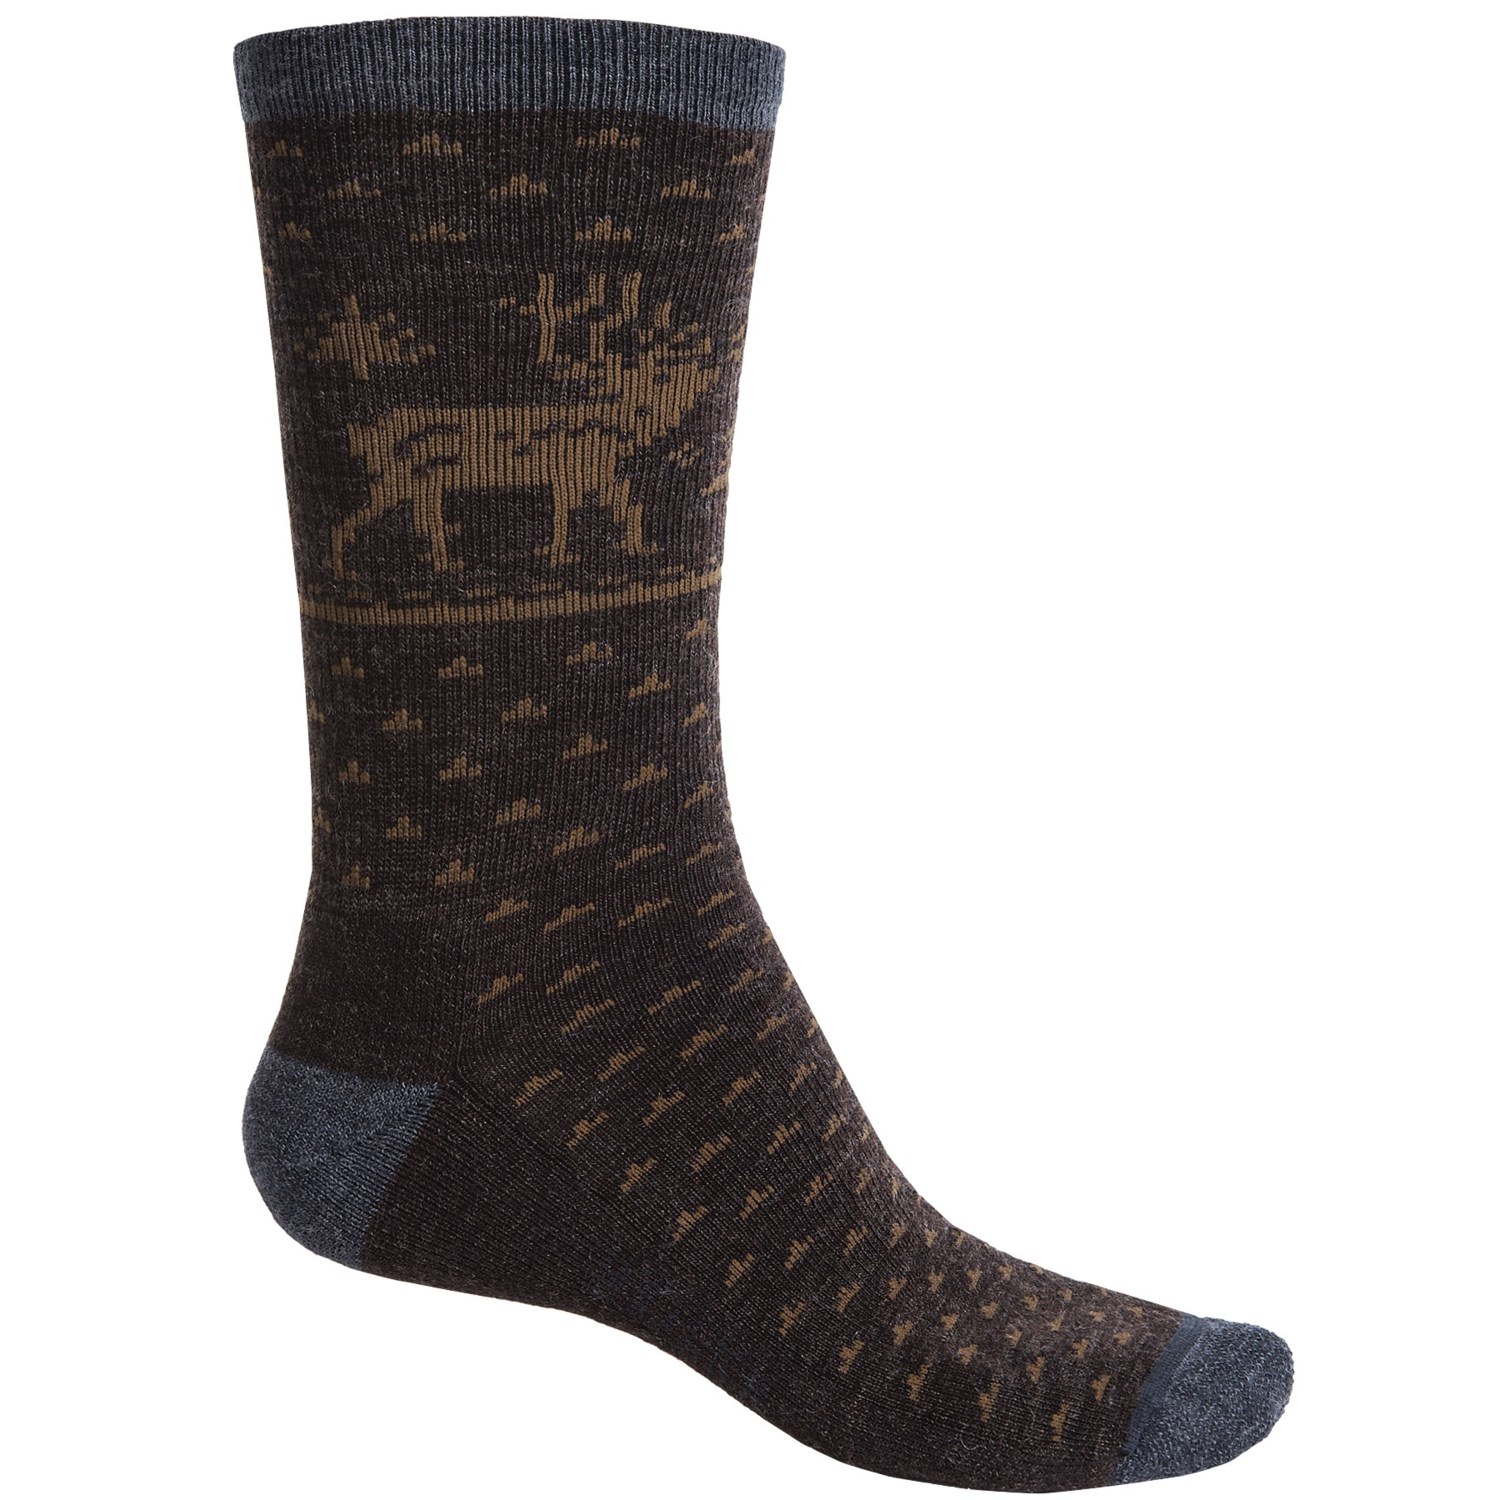 Woolrich Deer Socks (For Men)